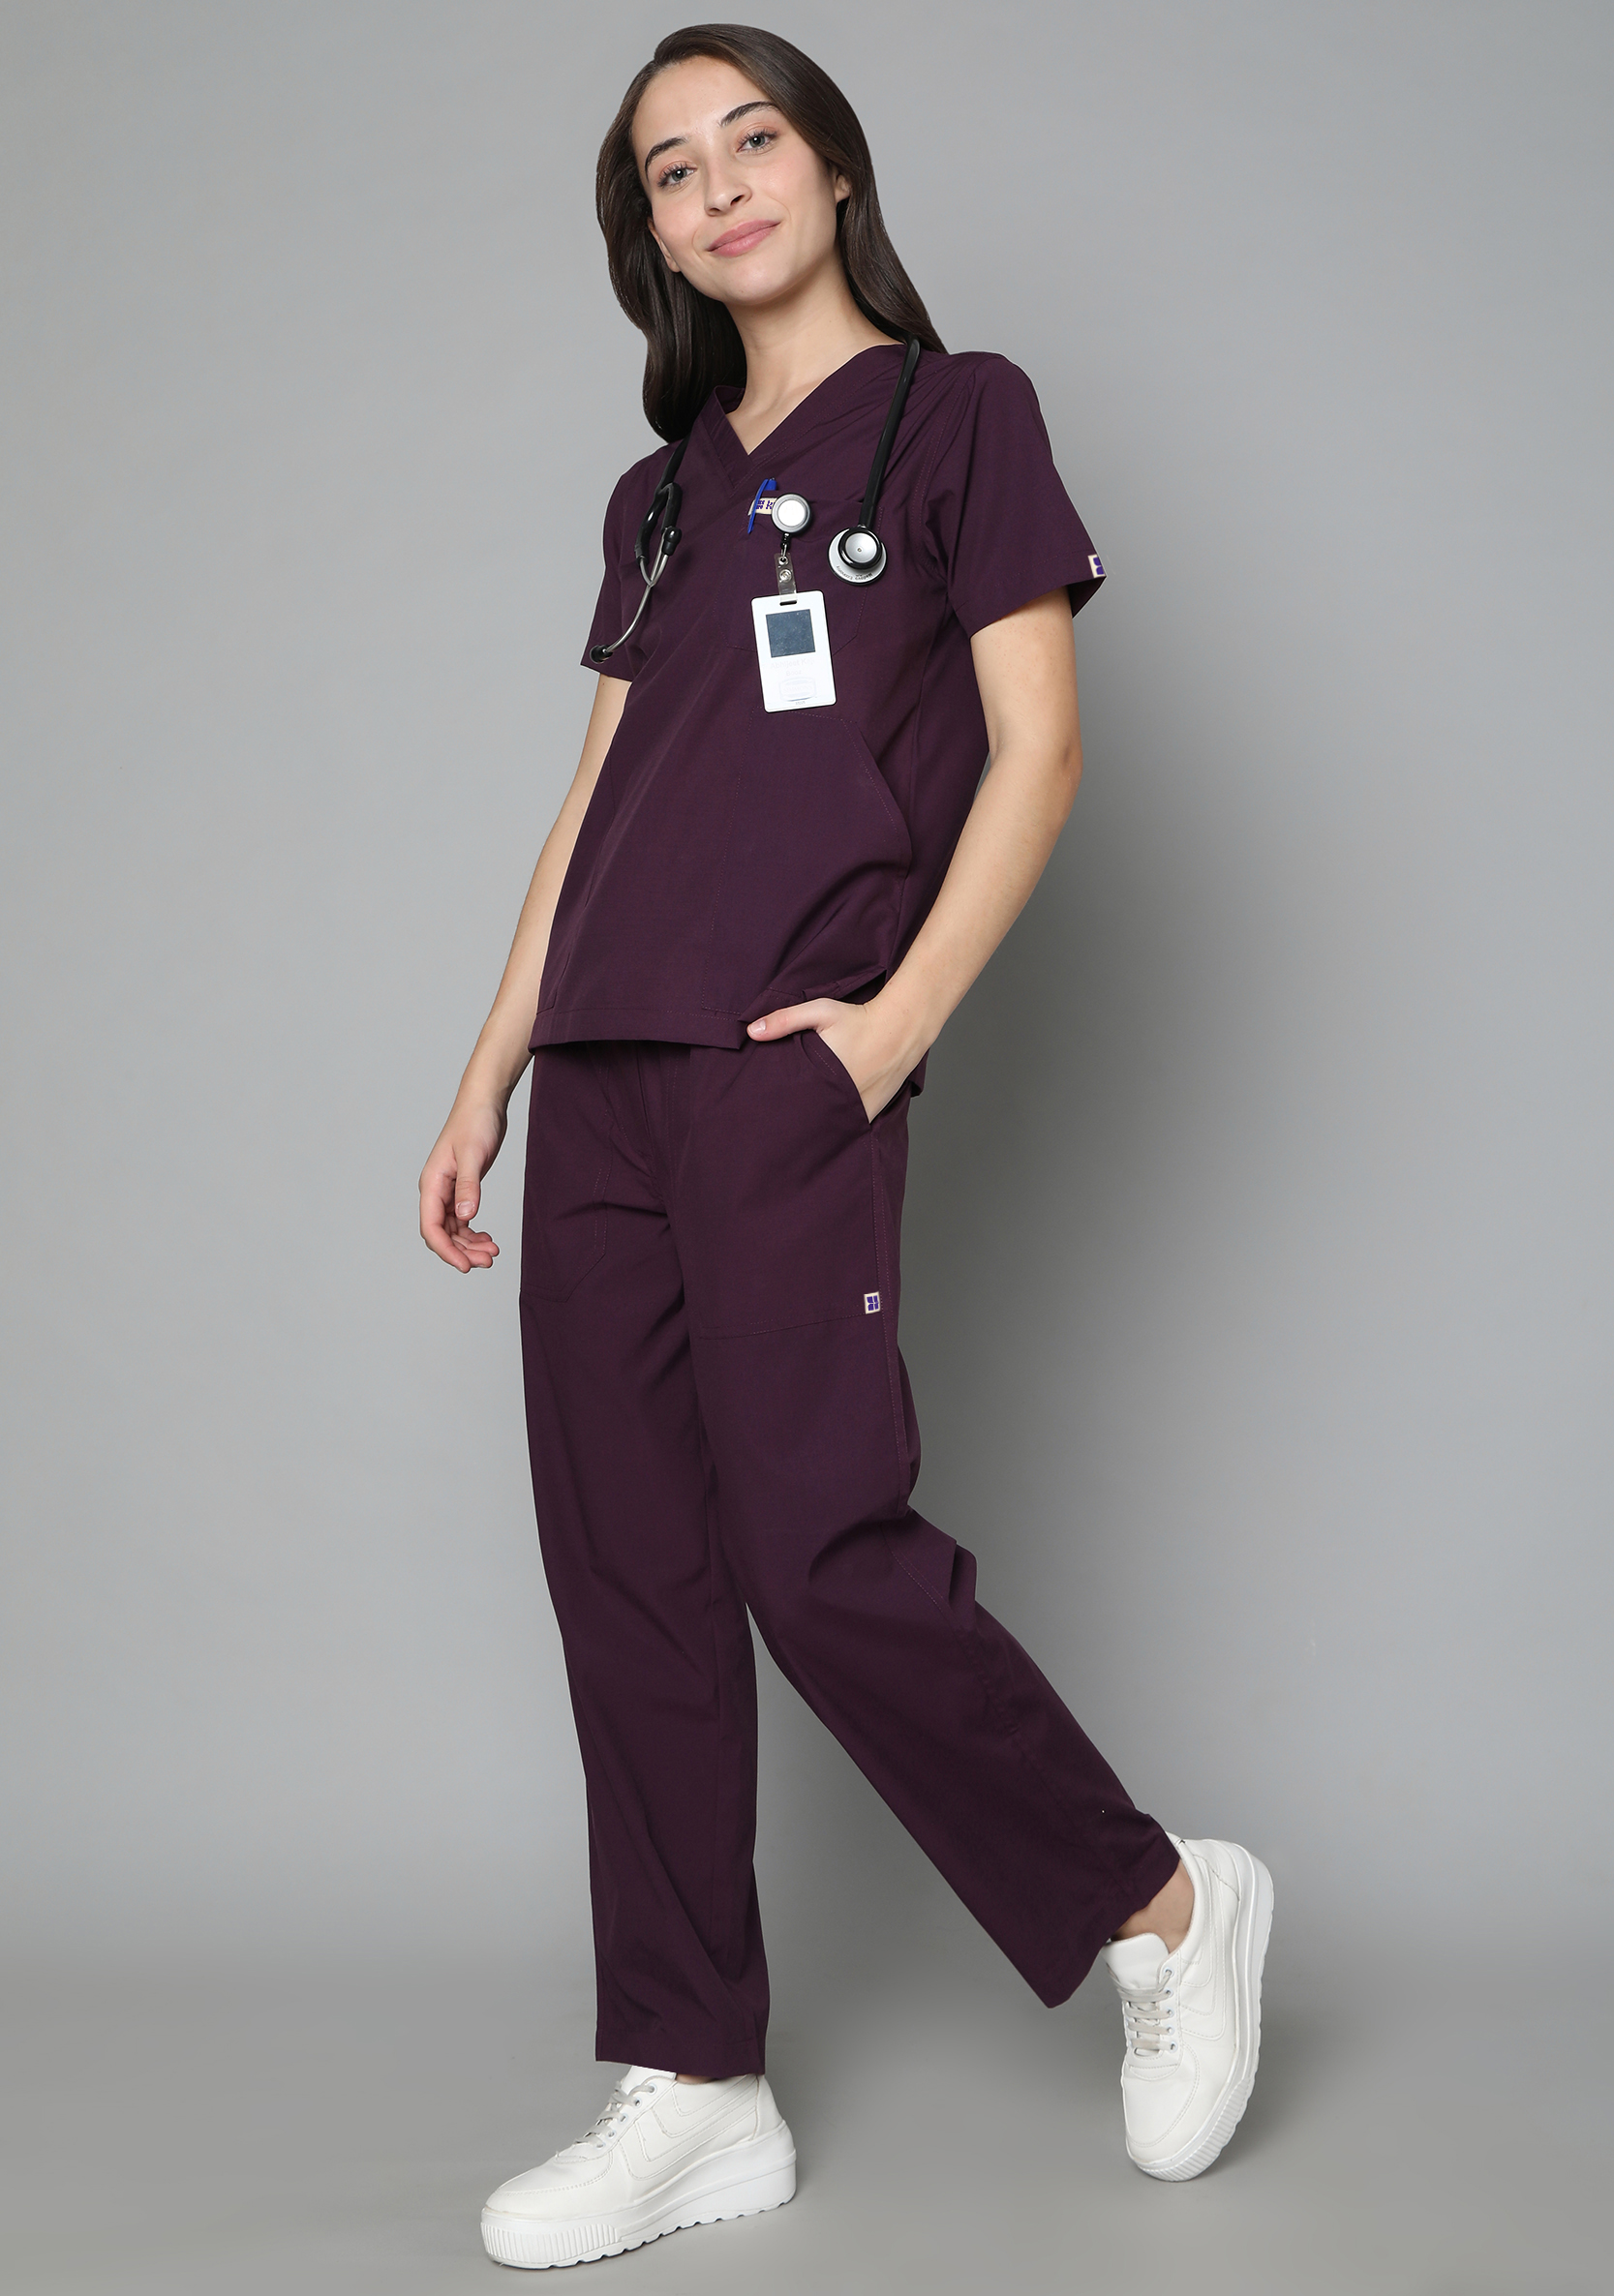 Sky Blue OT Dress/Scrubs (Unisex) | Prithvi Medical Book Store